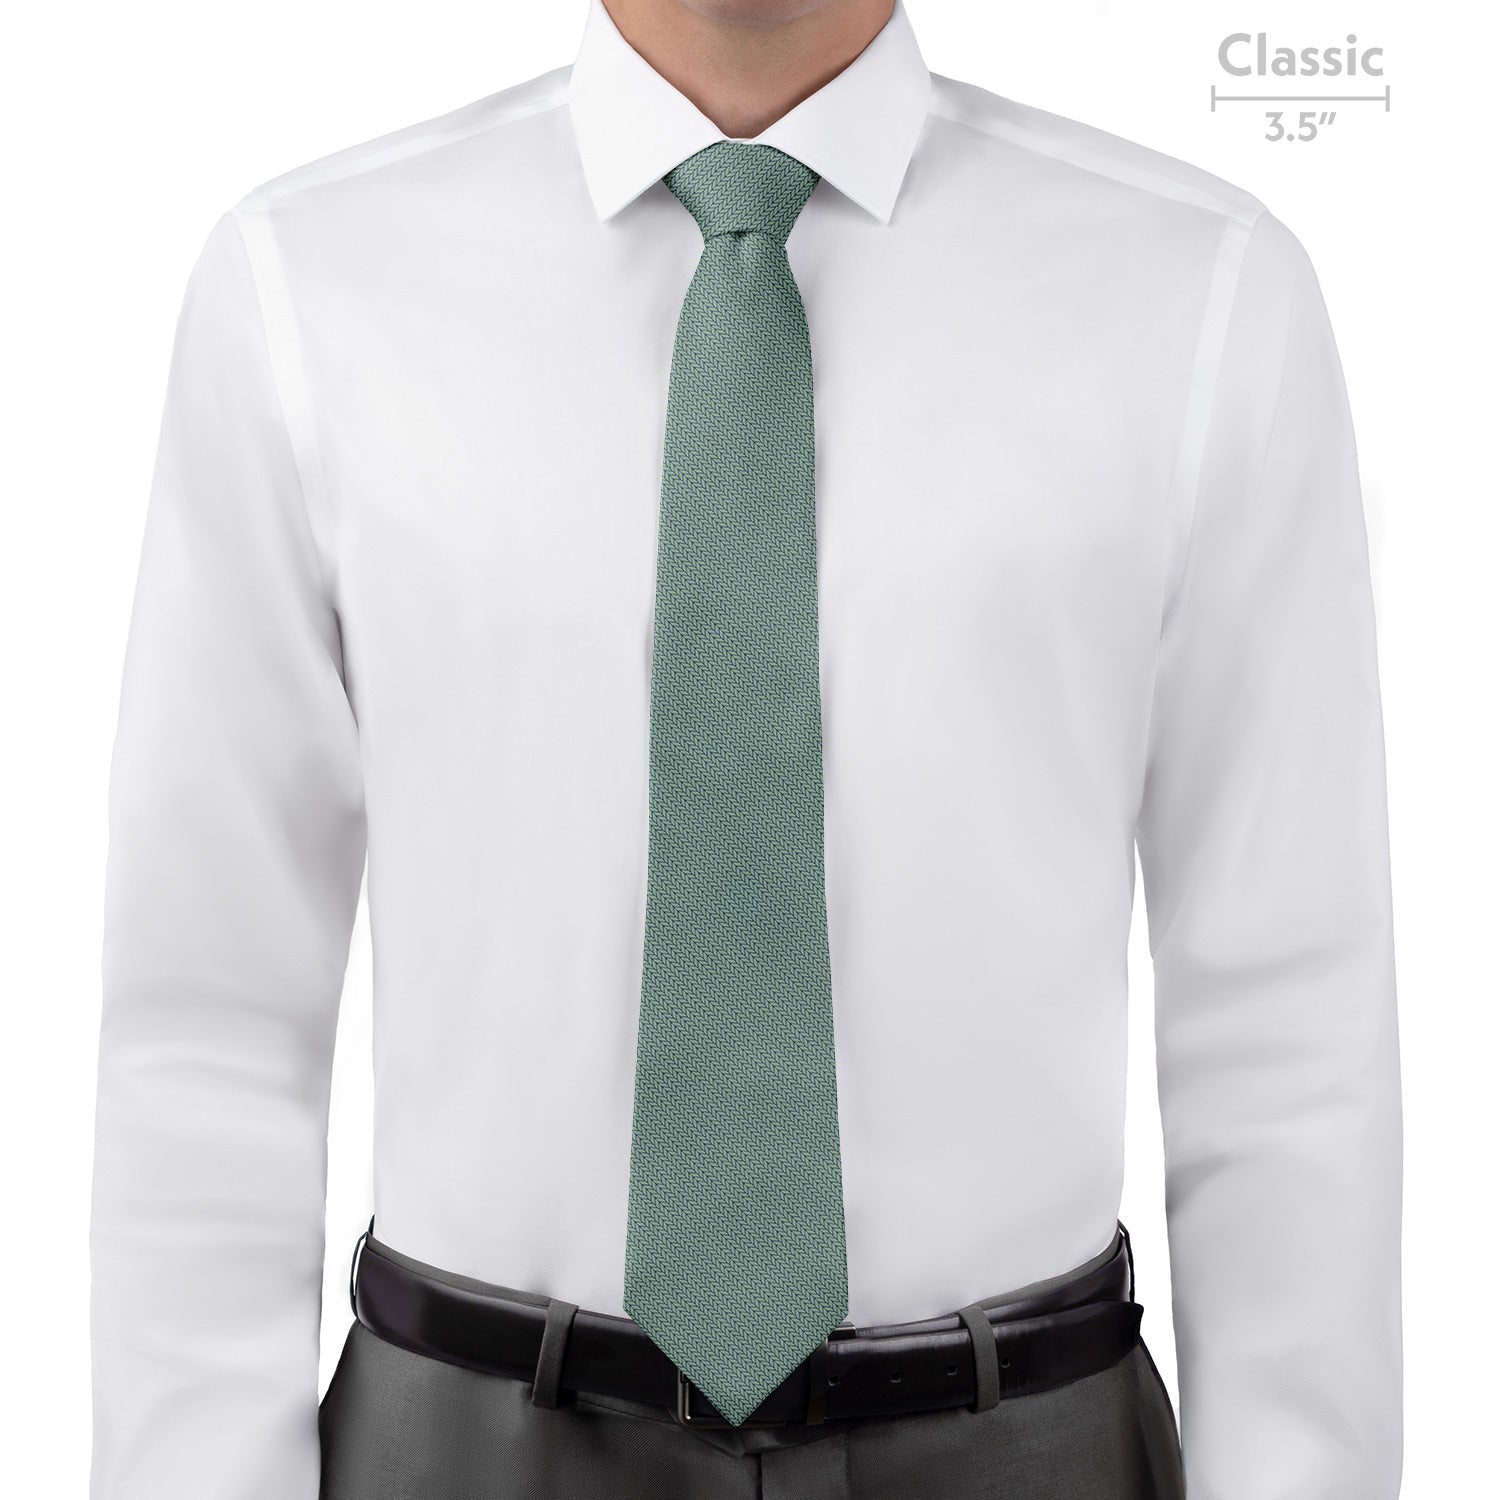 Faux Knit Necktie - Classic - Knotty Tie Co.